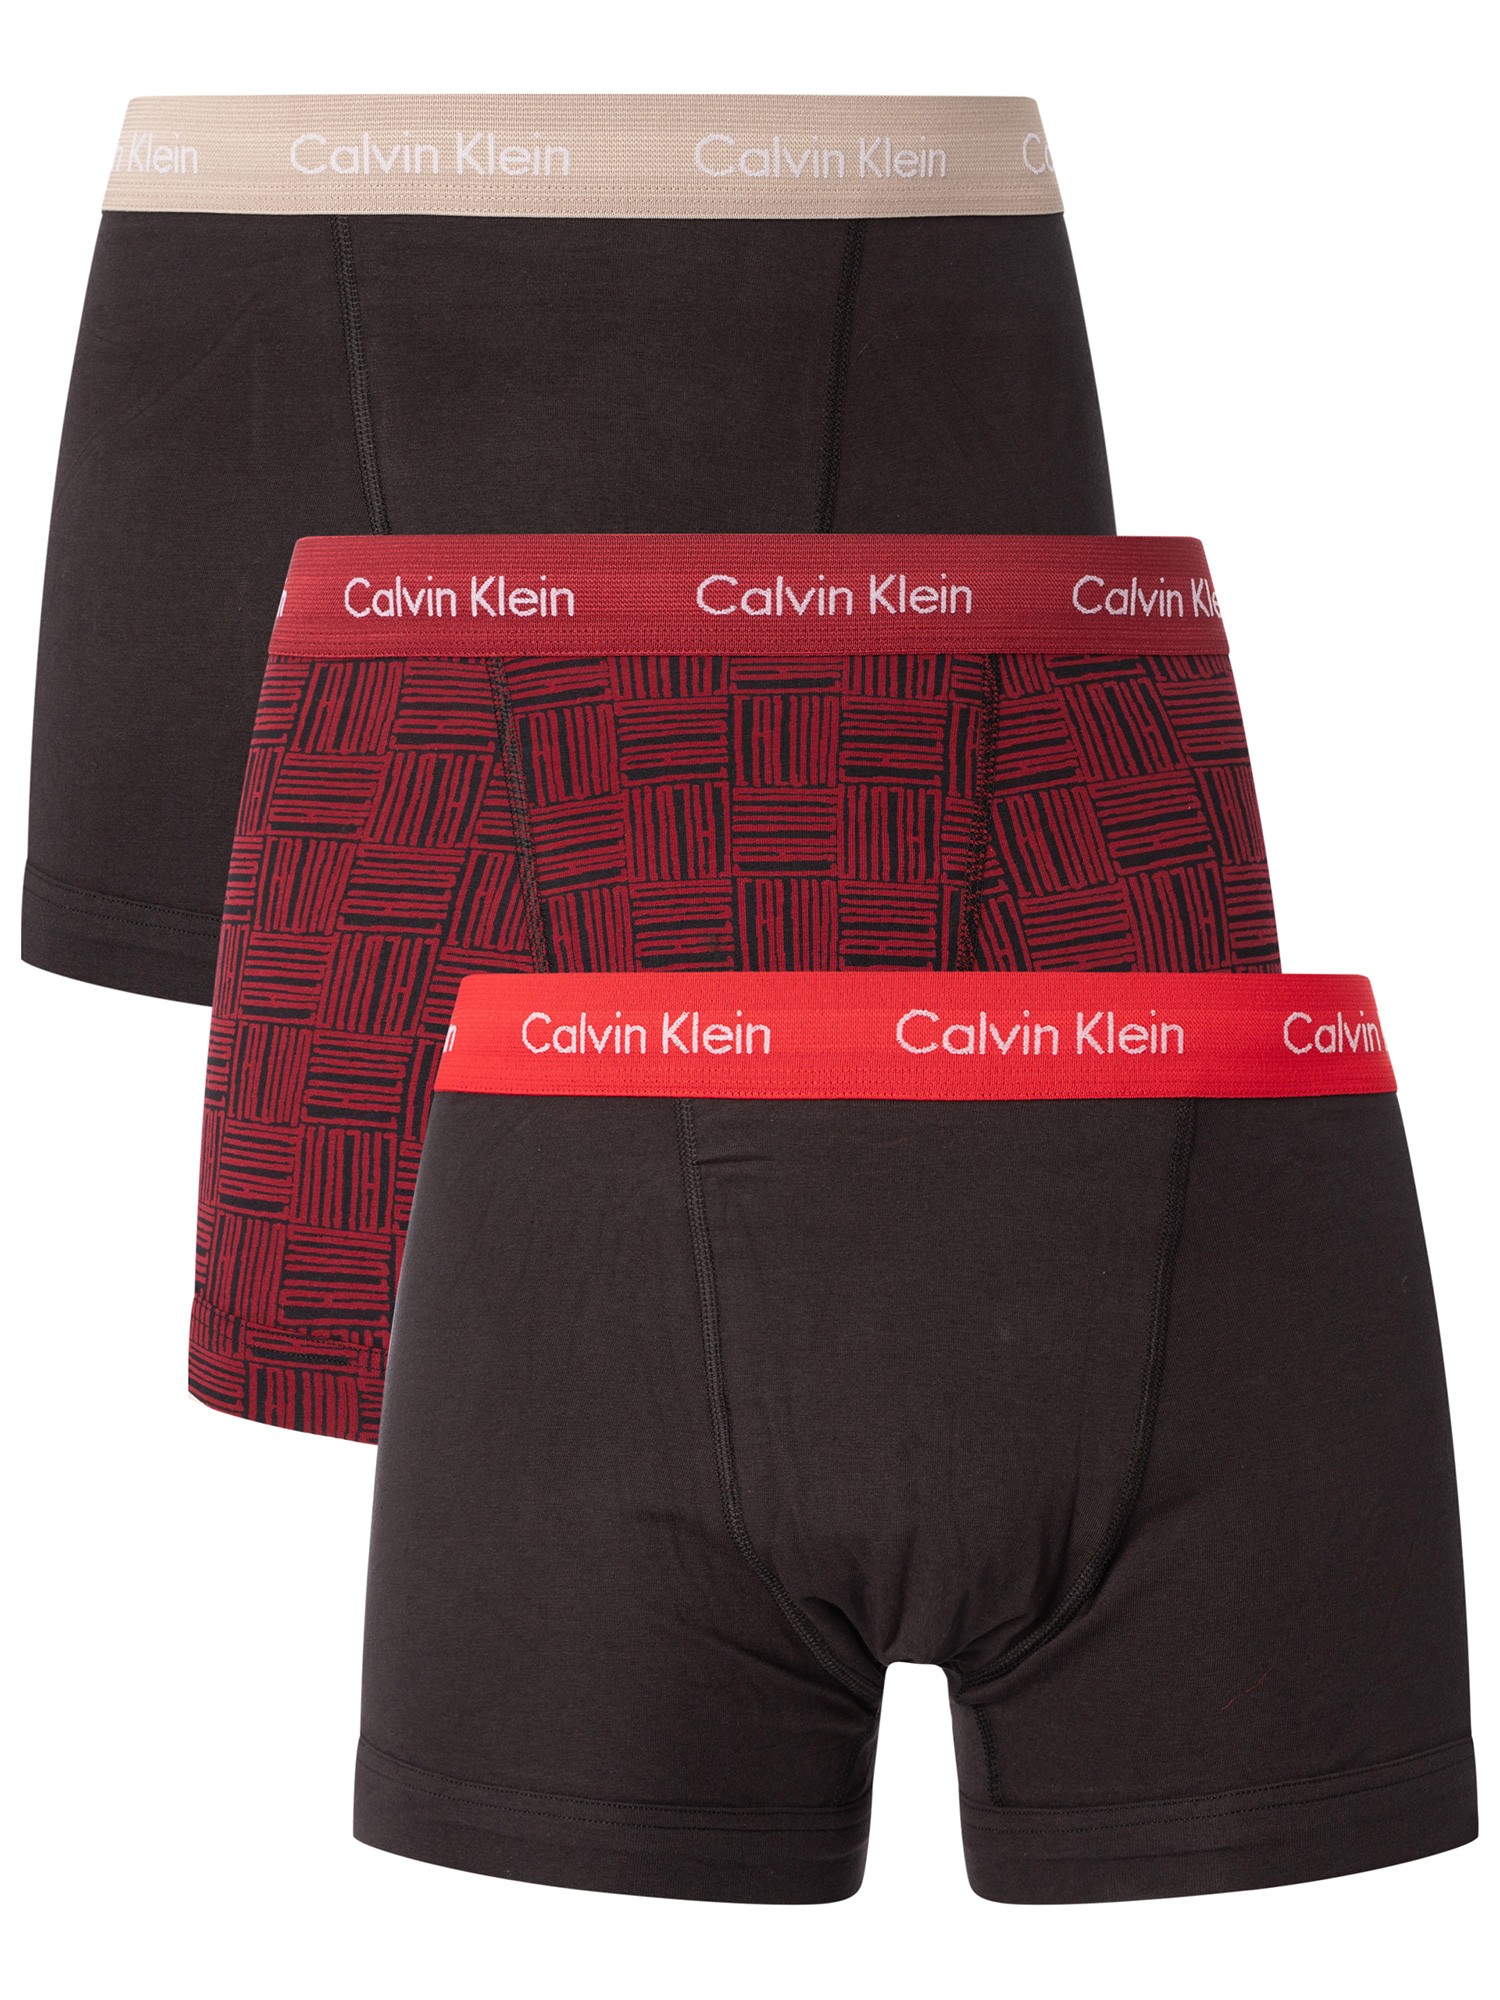 Calvin Klein 3 Pack Limited Edition Trunks - Black/Check Marker/Black |  Standout